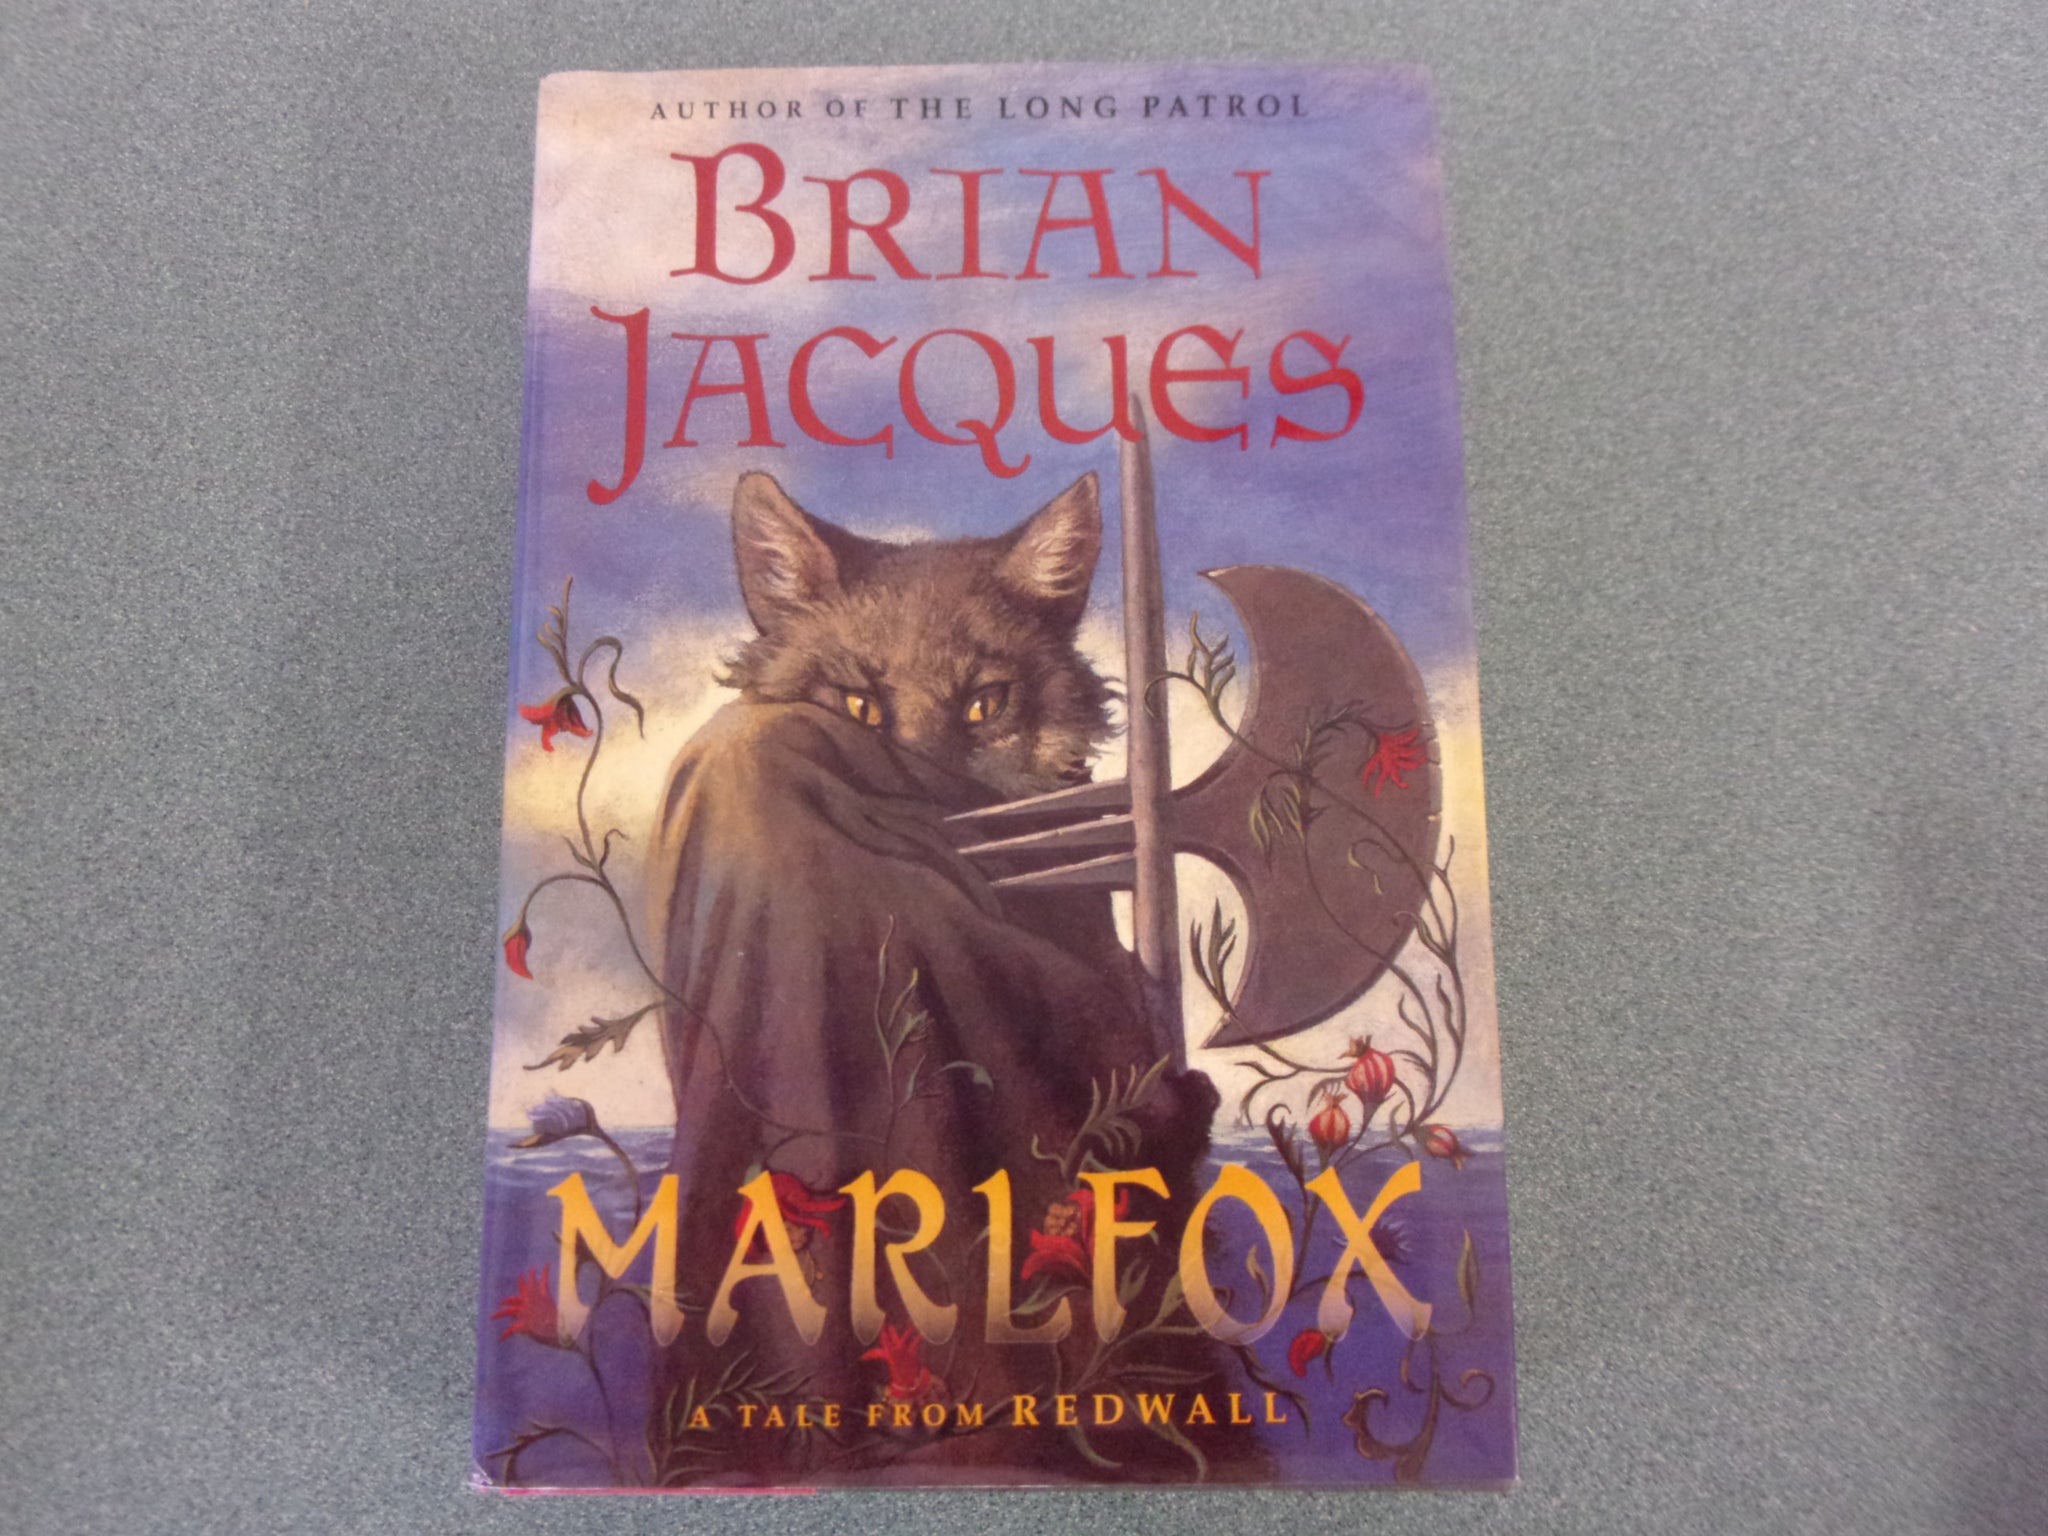 Marlfox by Brian Jacques